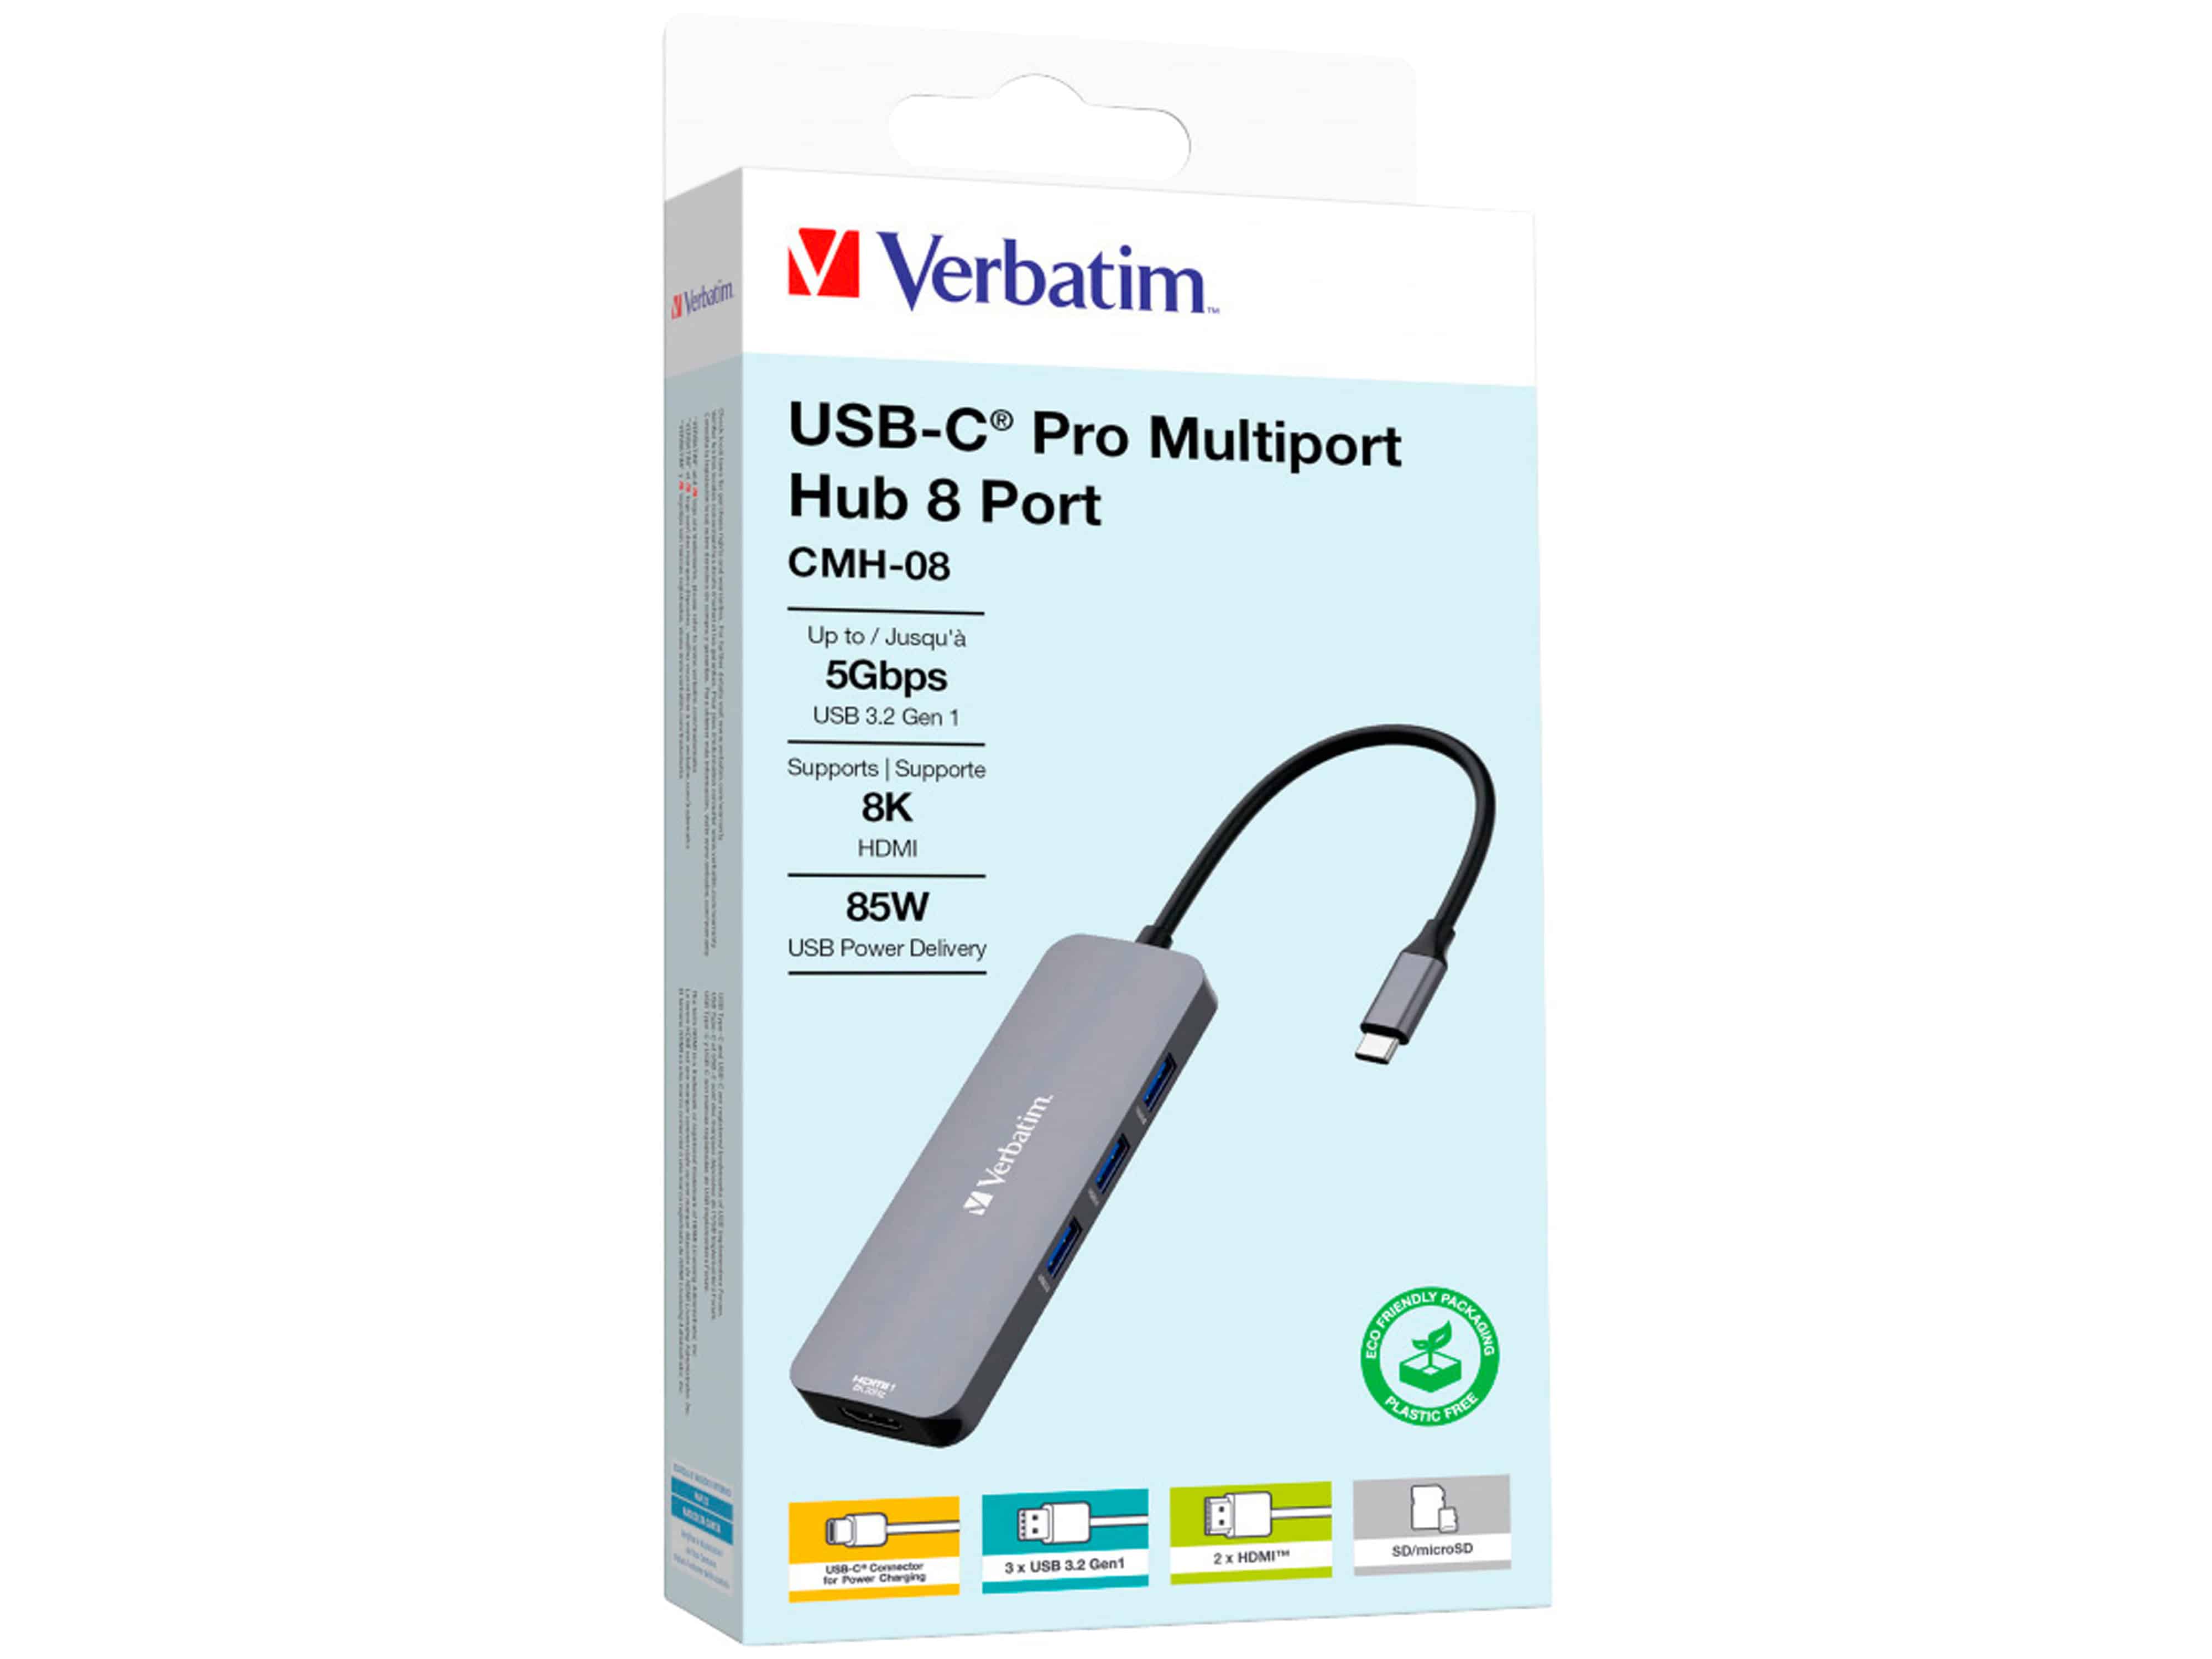 VERBATIM USB-C Pro Multiport Hub CMH-08